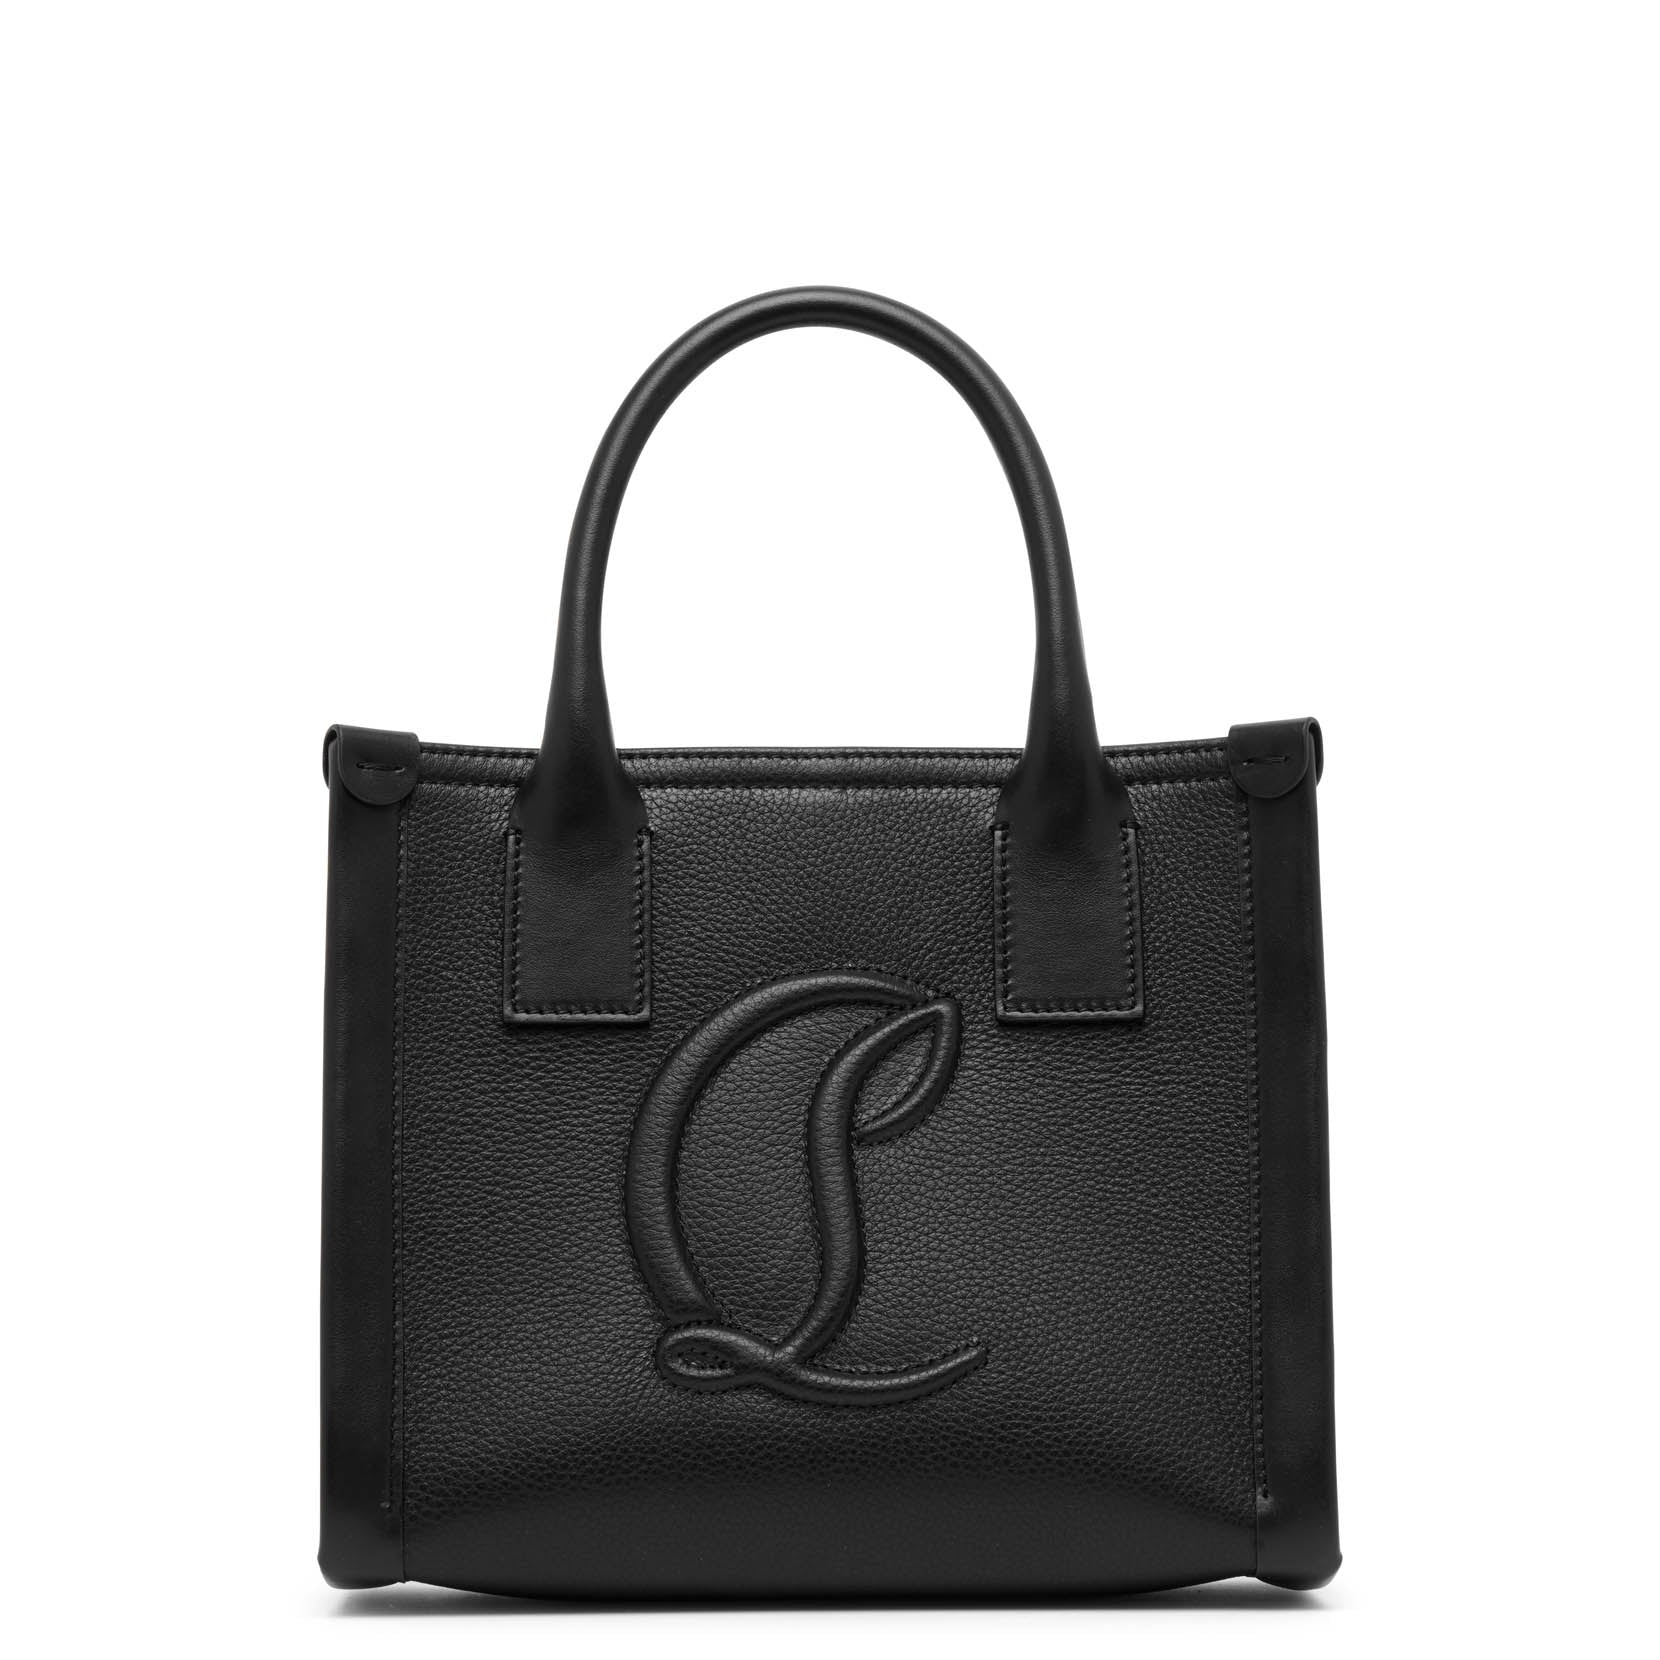 Christian Louboutin By My Side E/w Mini Black Leather Tote Bag